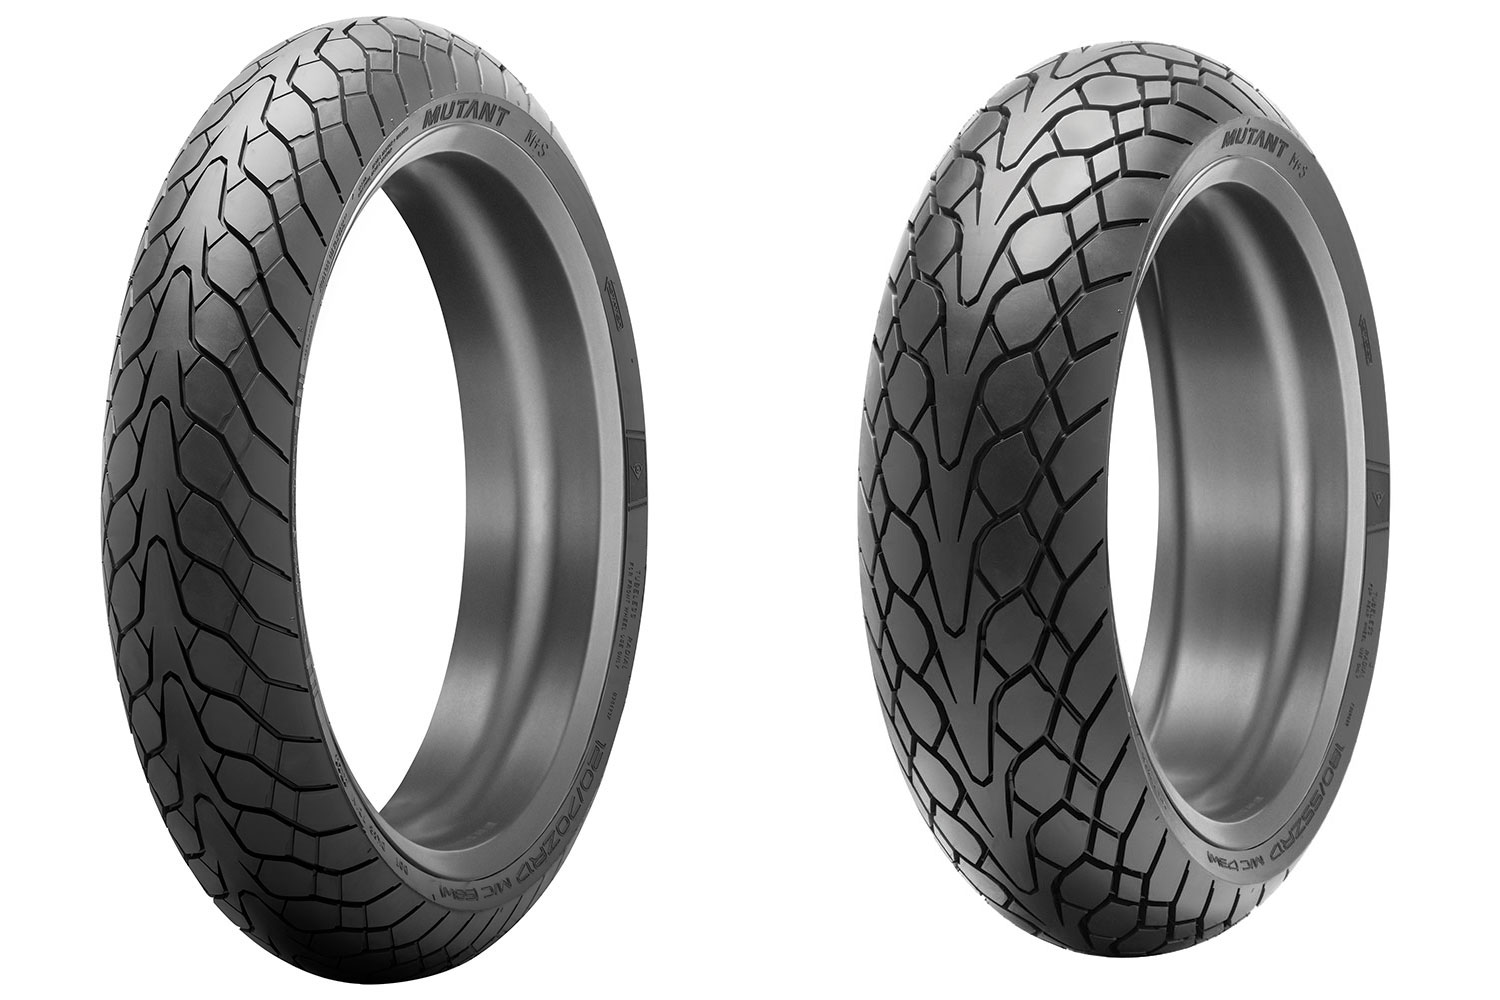 Dunlop Mutant Tires, Gear Review